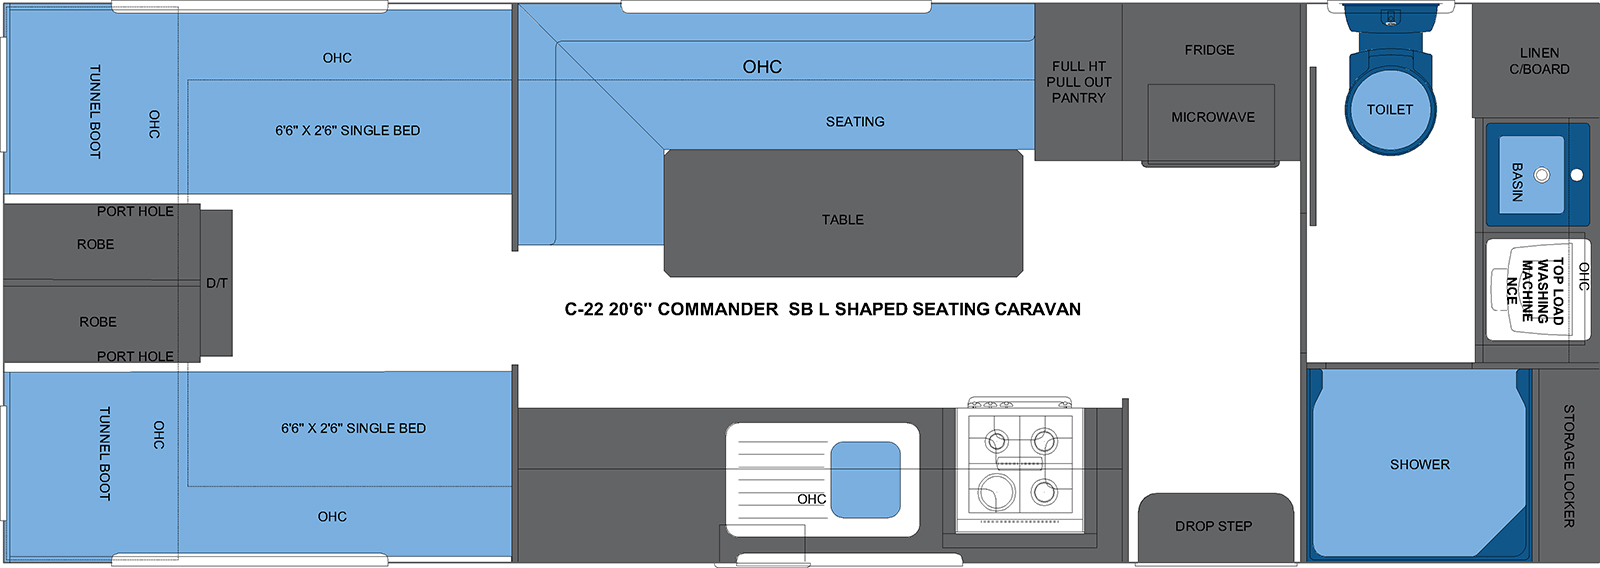 C-22 20'6 COMMANDER SB L SHAPED SEATING CARAVAN